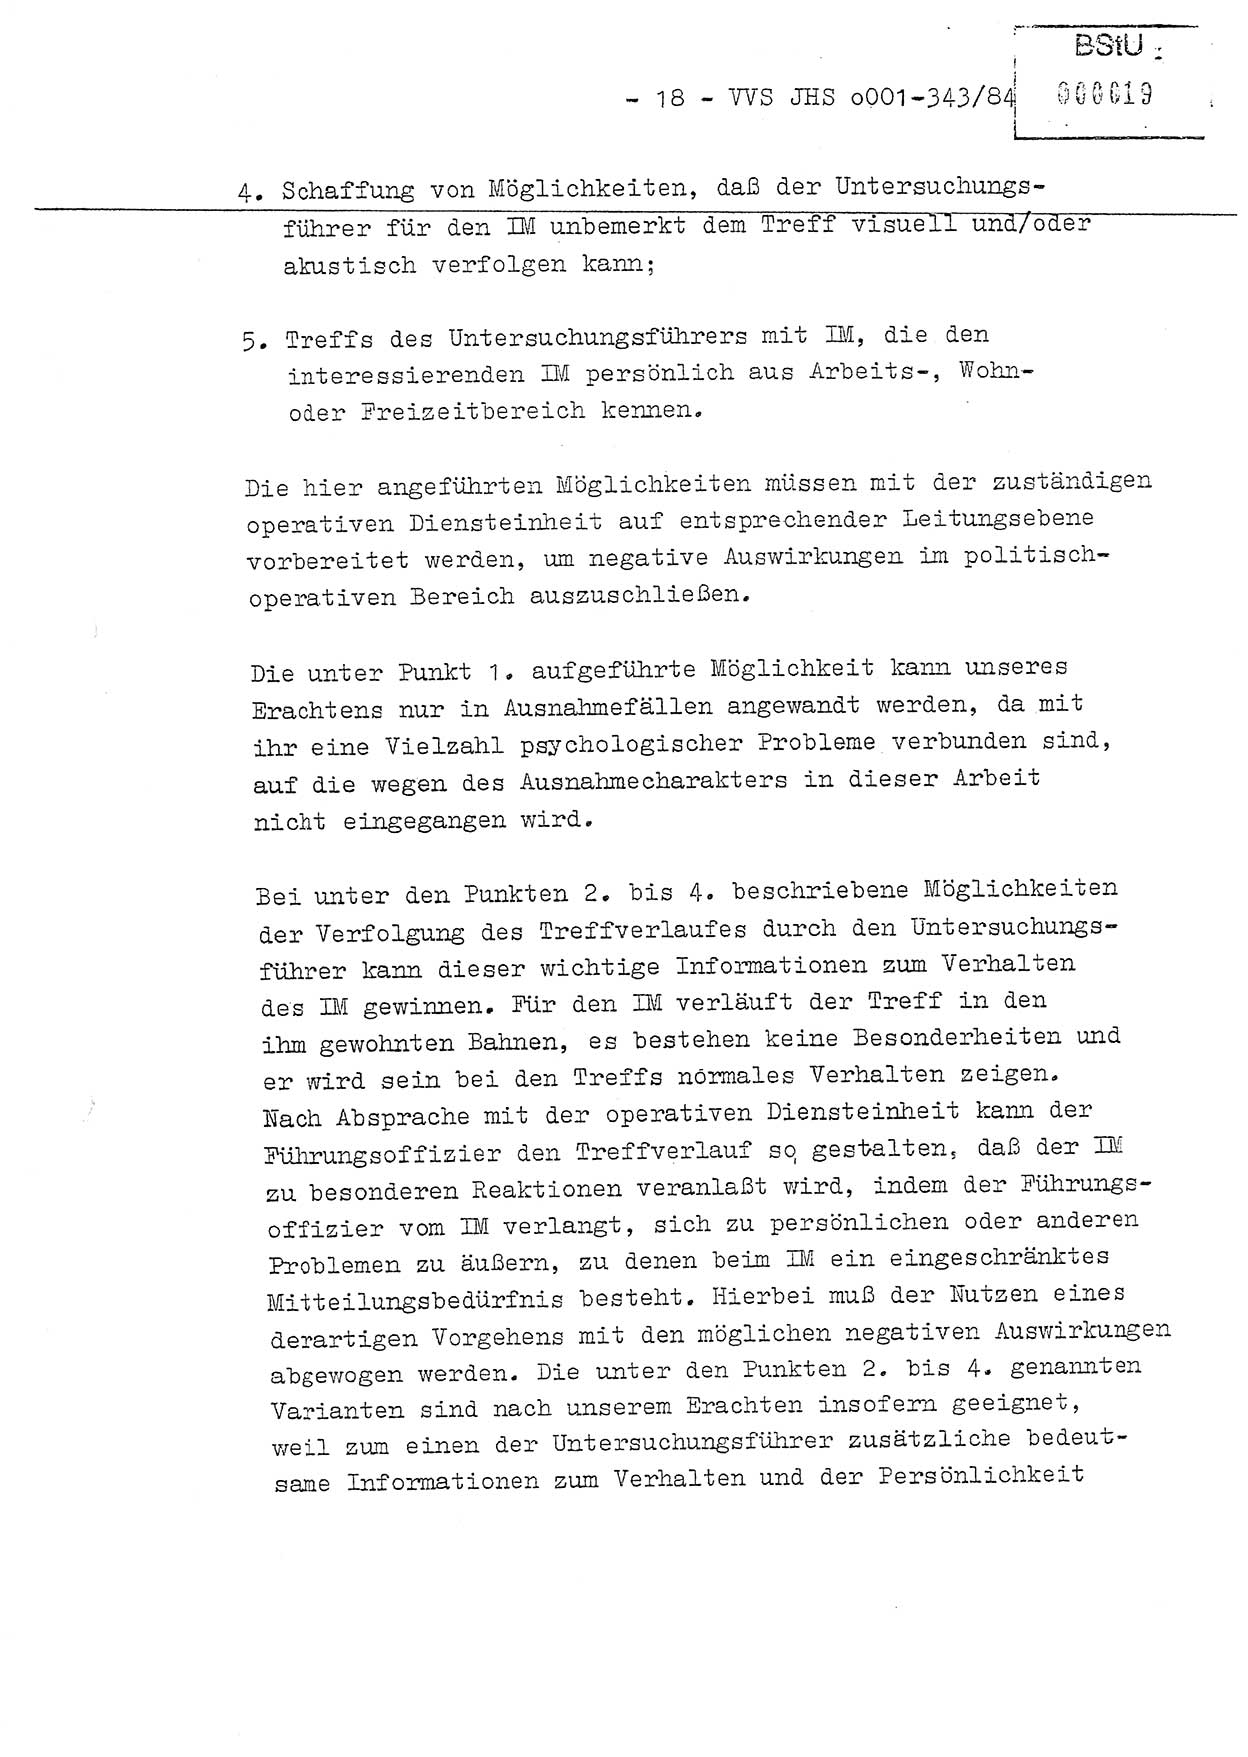 Diplomarbeit, Oberleutnant Bernd Michael (HA Ⅸ/5), Oberleutnant Peter Felber (HA IX/5), Ministerium für Staatssicherheit (MfS) [Deutsche Demokratische Republik (DDR)], Juristische Hochschule (JHS), Vertrauliche Verschlußsache (VVS) o001-343/84, Potsdam 1985, Seite 18 (Dipl.-Arb. MfS DDR JHS VVS o001-343/84 1985, S. 18)